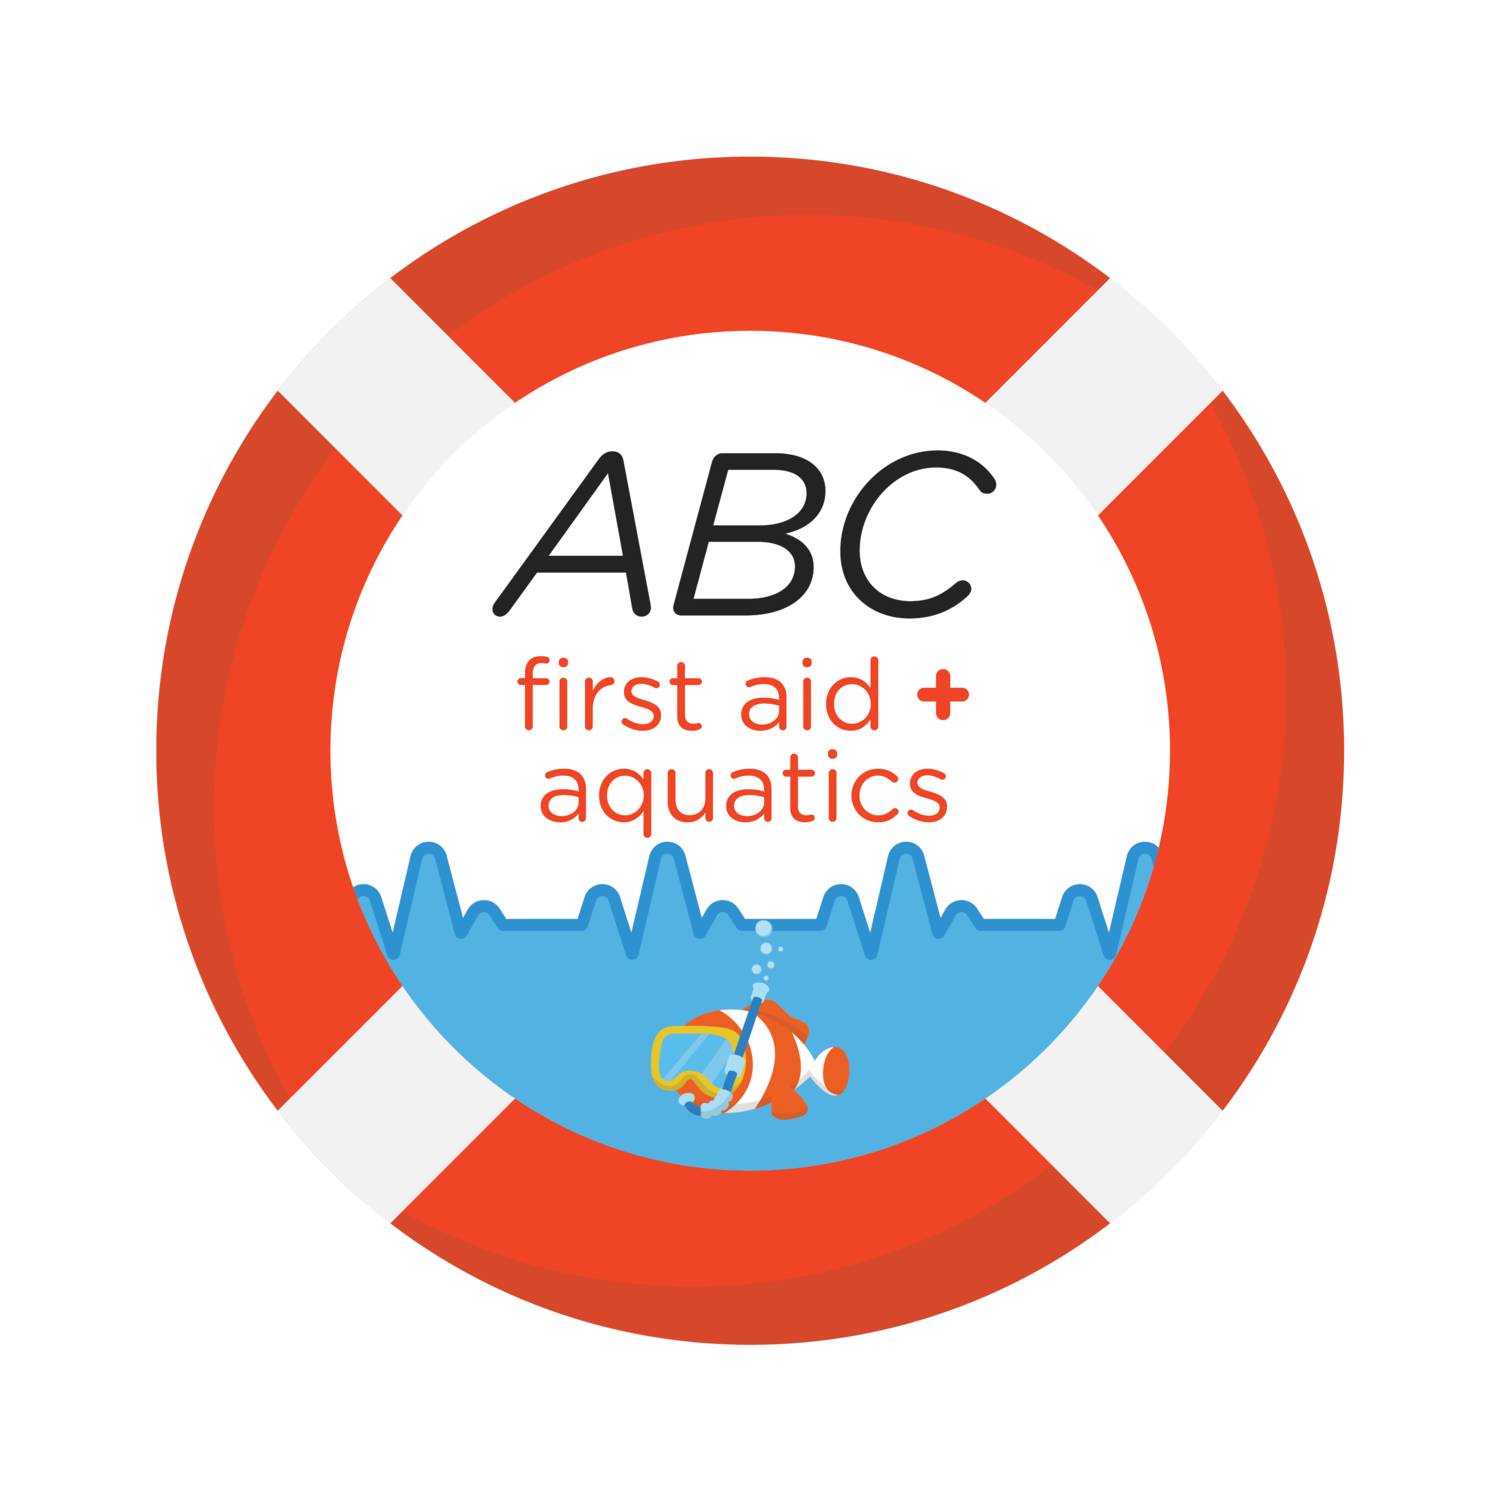 ABC first aid + aquatics